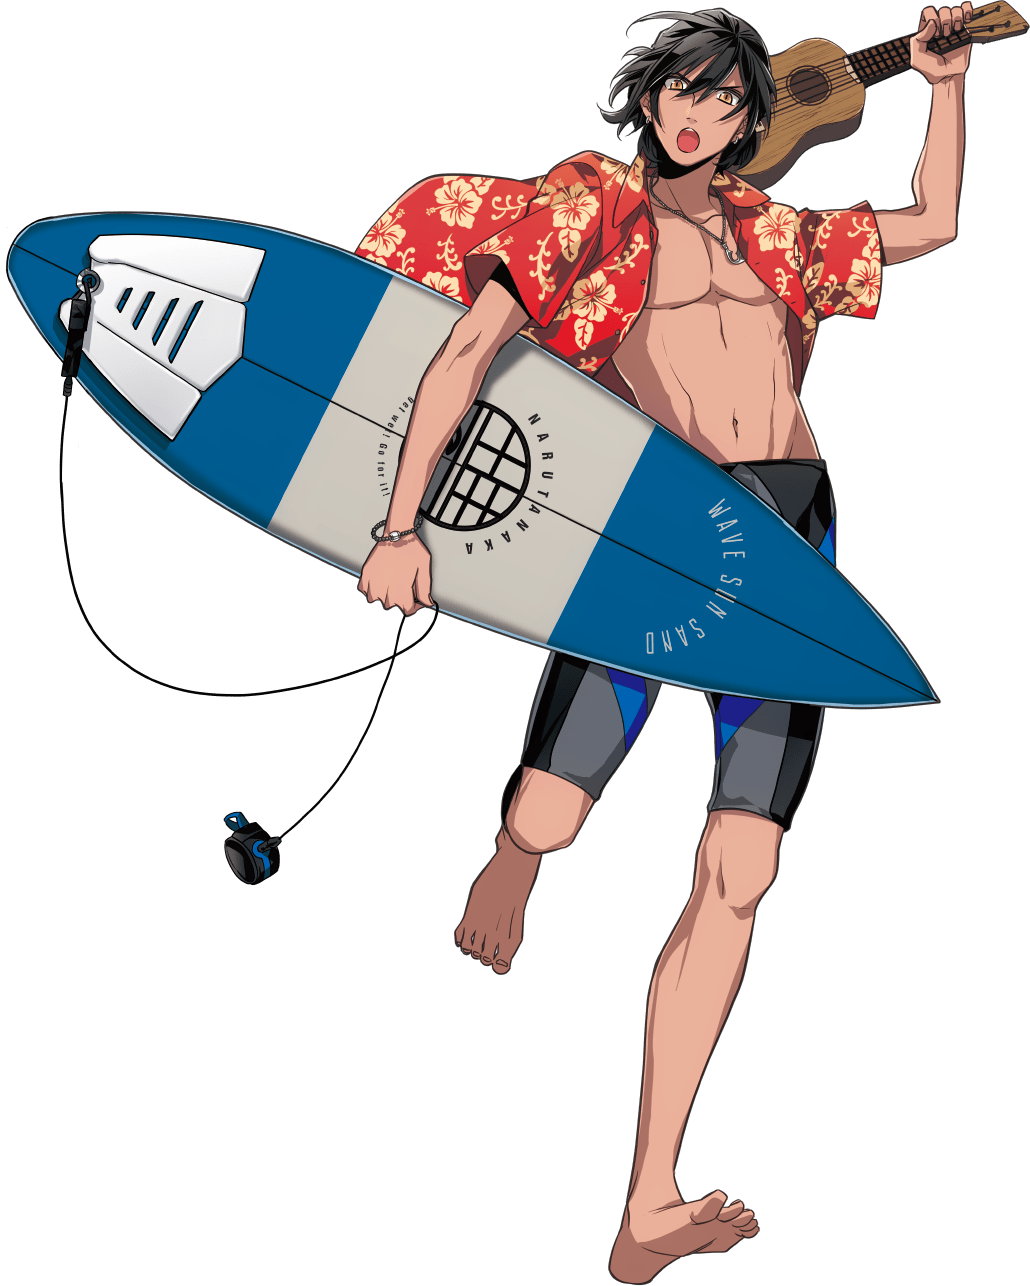 prompthunt: Miku Hatsune, anime, manga girl, surfing on a wave, ocean,  swirl, Miku Hatsune has long blue hair, anime, turquoise hair, surfboard,  surfing on a wave, speed fantasy, surreal, japan